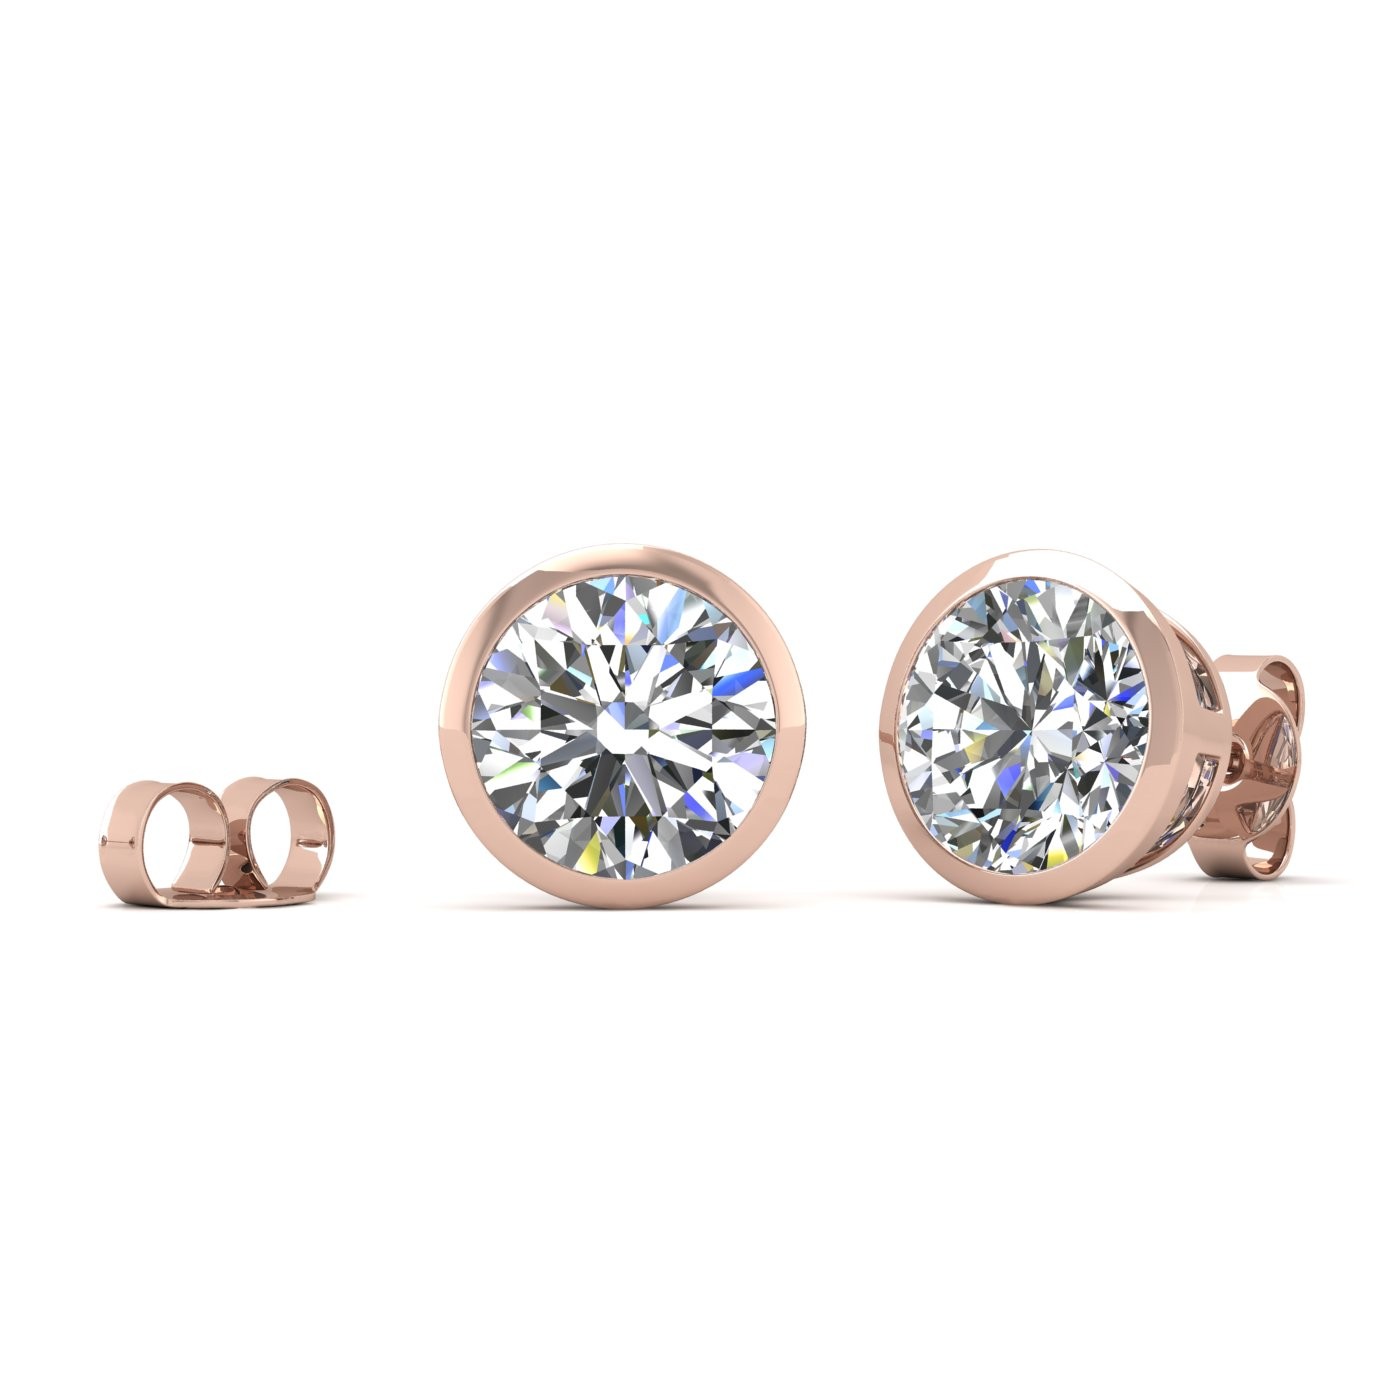 18k rose gold  0,7 ct each (1,4 tcw) round brilliant cut diamond bezel set earring studs Photos & images